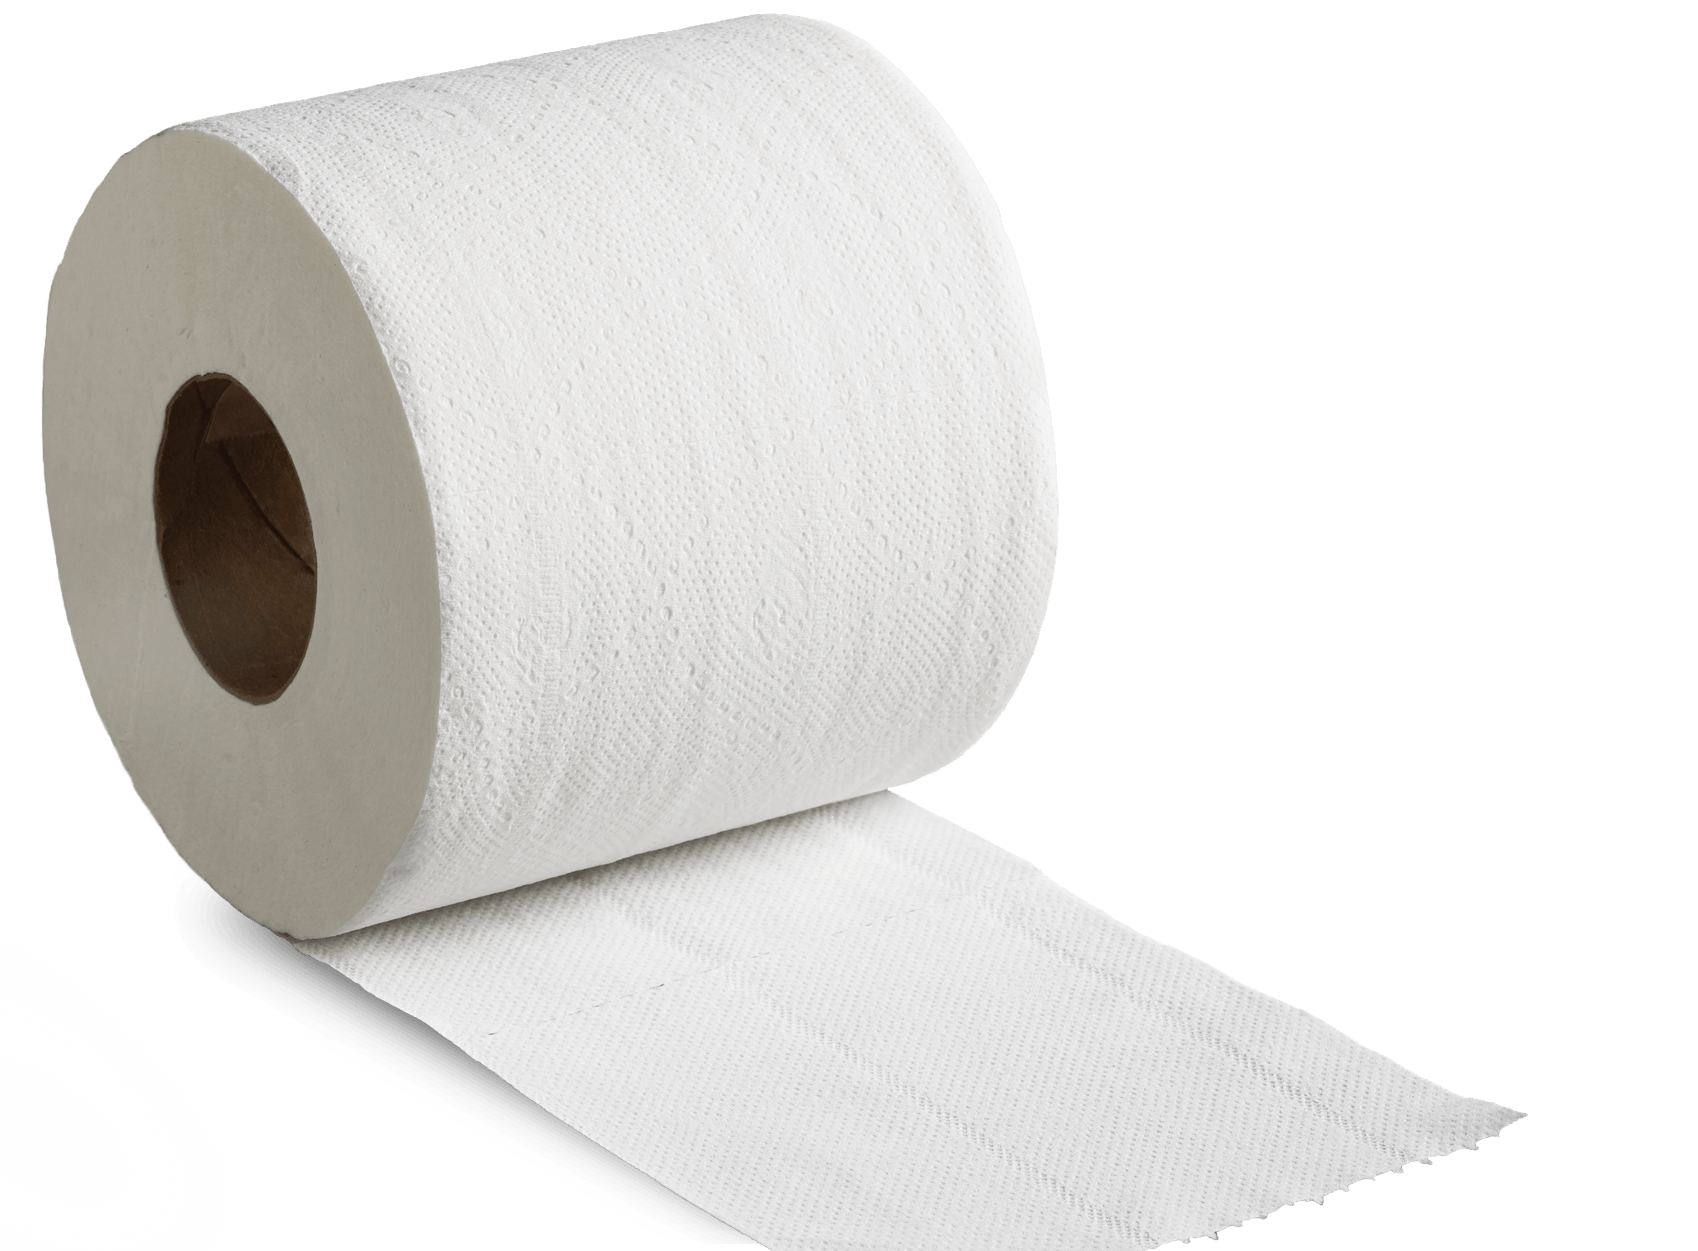 Туалетная бумага. Туалетная бумага на прозрачном фоне. Ребенок с туалетной бумагой. Roll туалетная бумага.